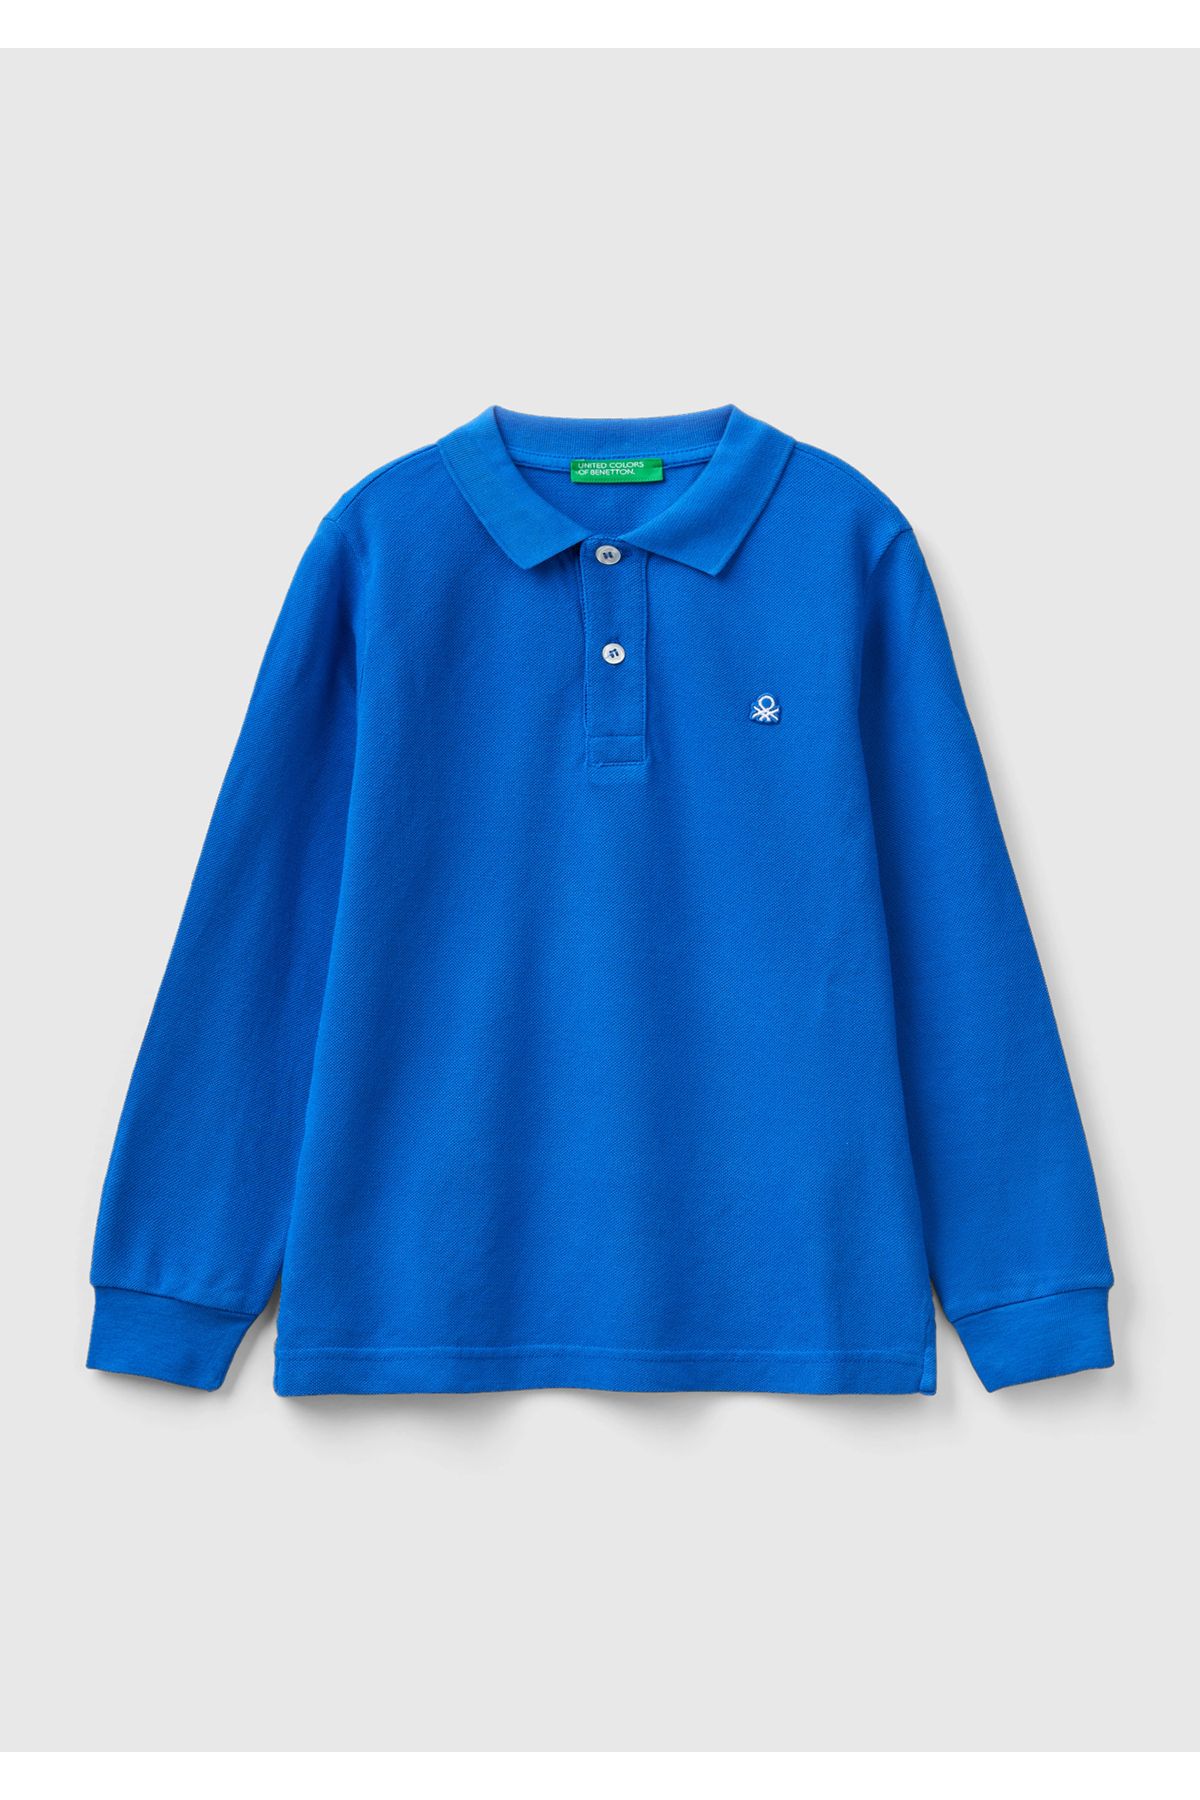 United Colors of Benetton Erkek Çocuk Saks Mavi Logolu Polo T-Shirt